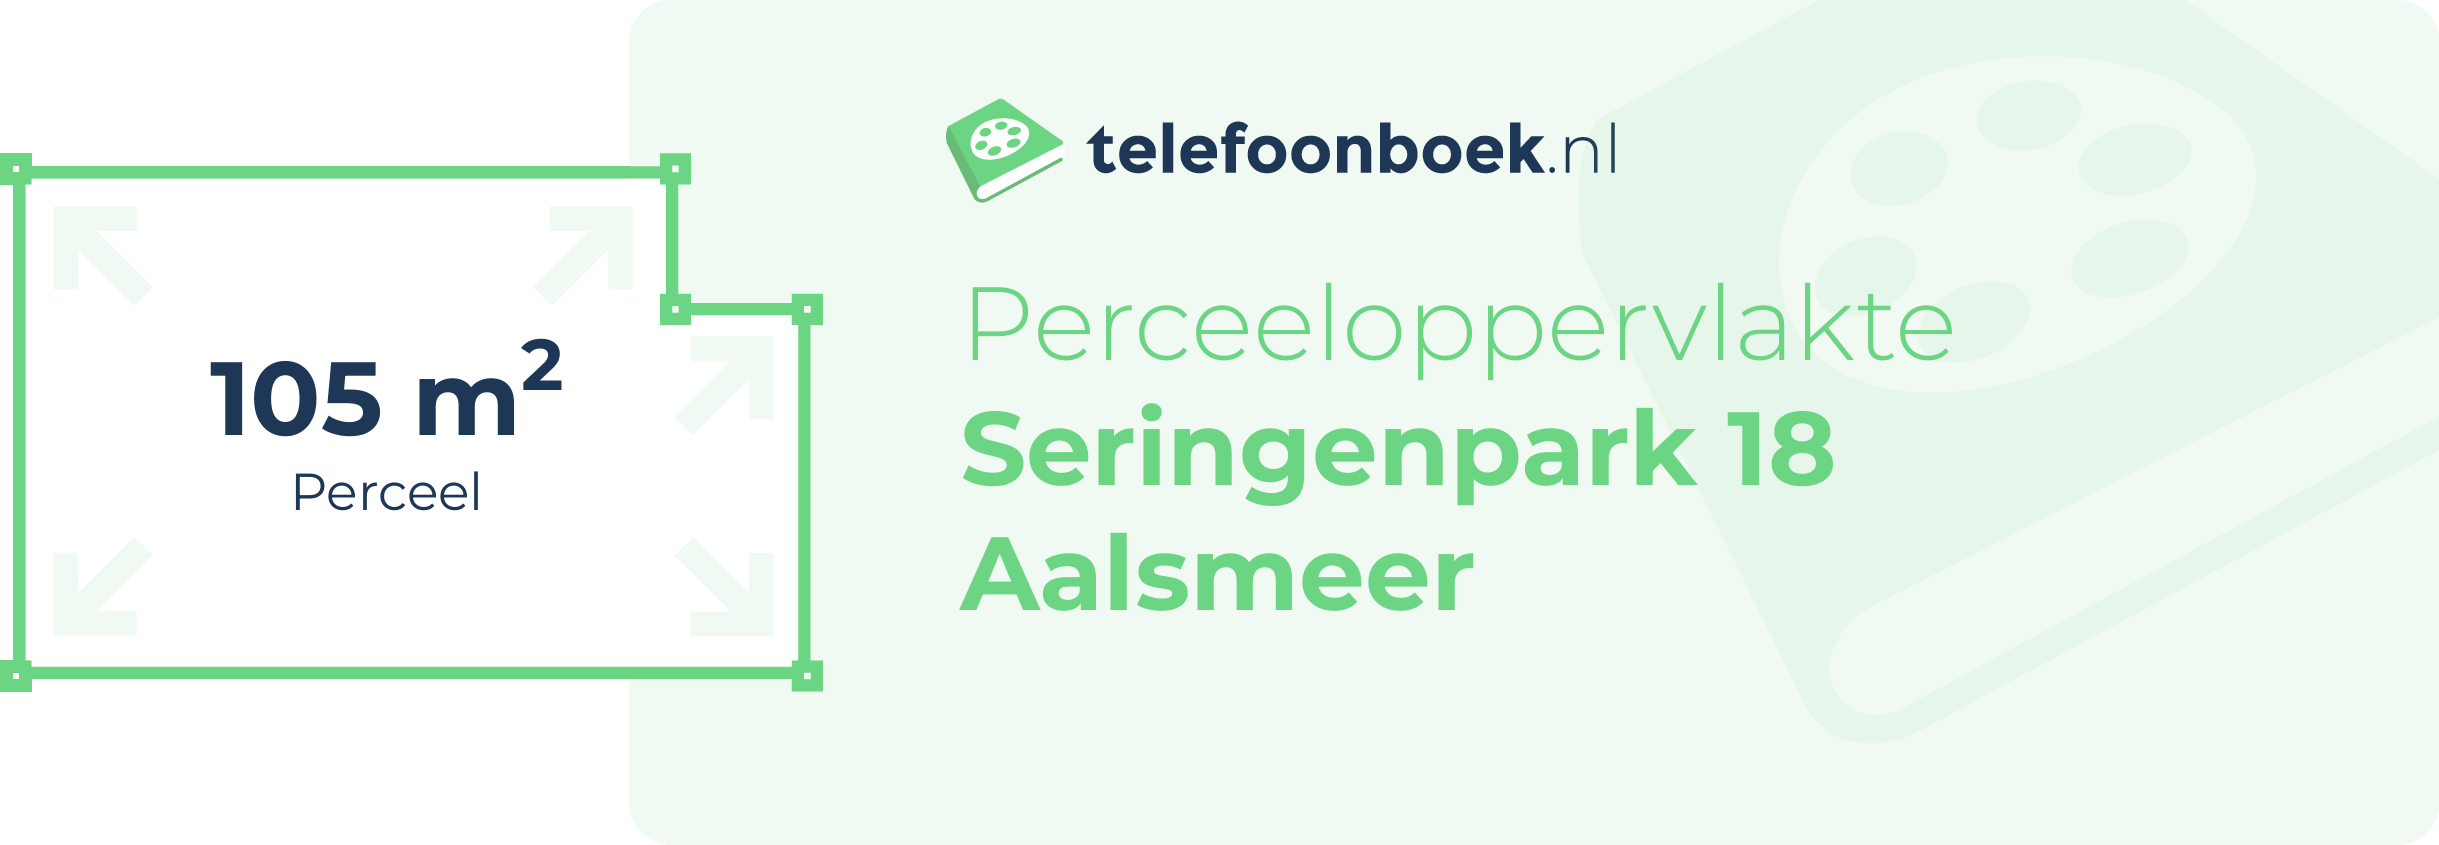 Perceeloppervlakte Seringenpark 18 Aalsmeer